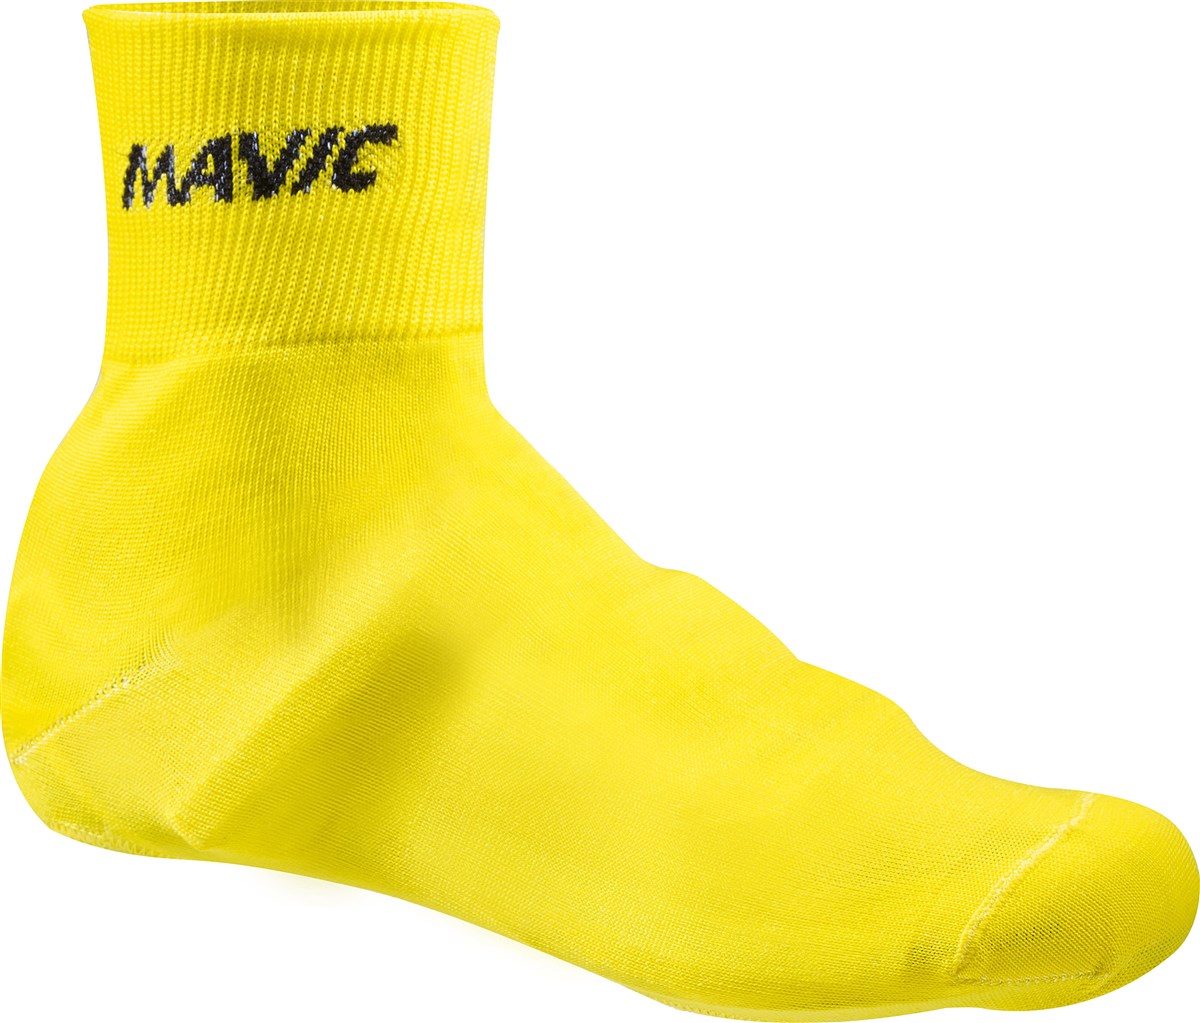 Mavic Knit Shoe Cover SS17 product image